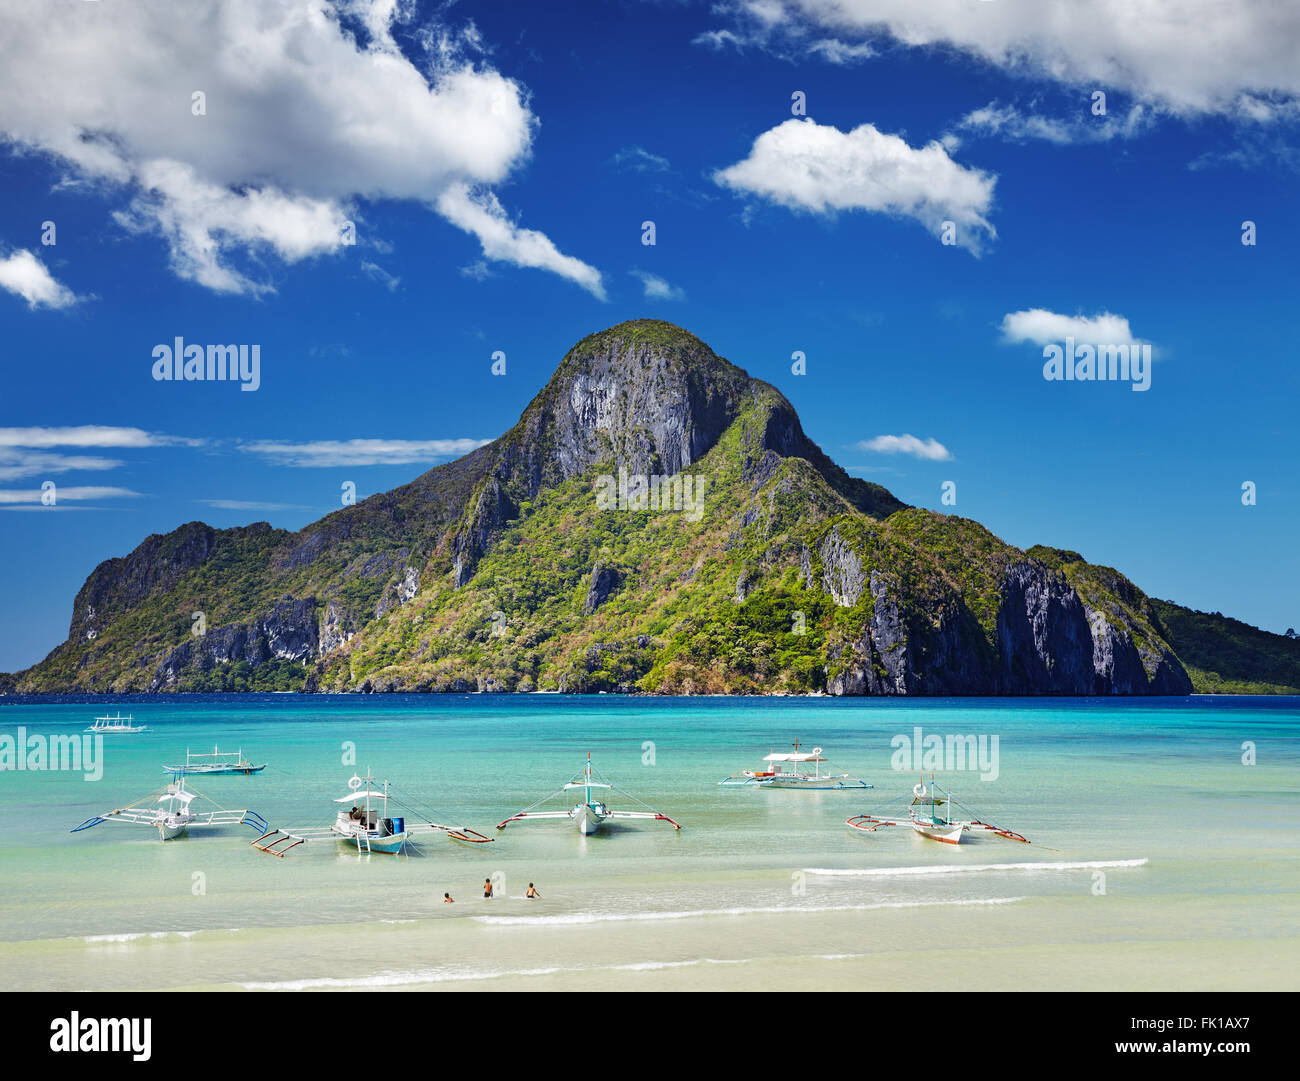 El Nido bay and Cadlao island, Palawan, Philippines Stock Photo